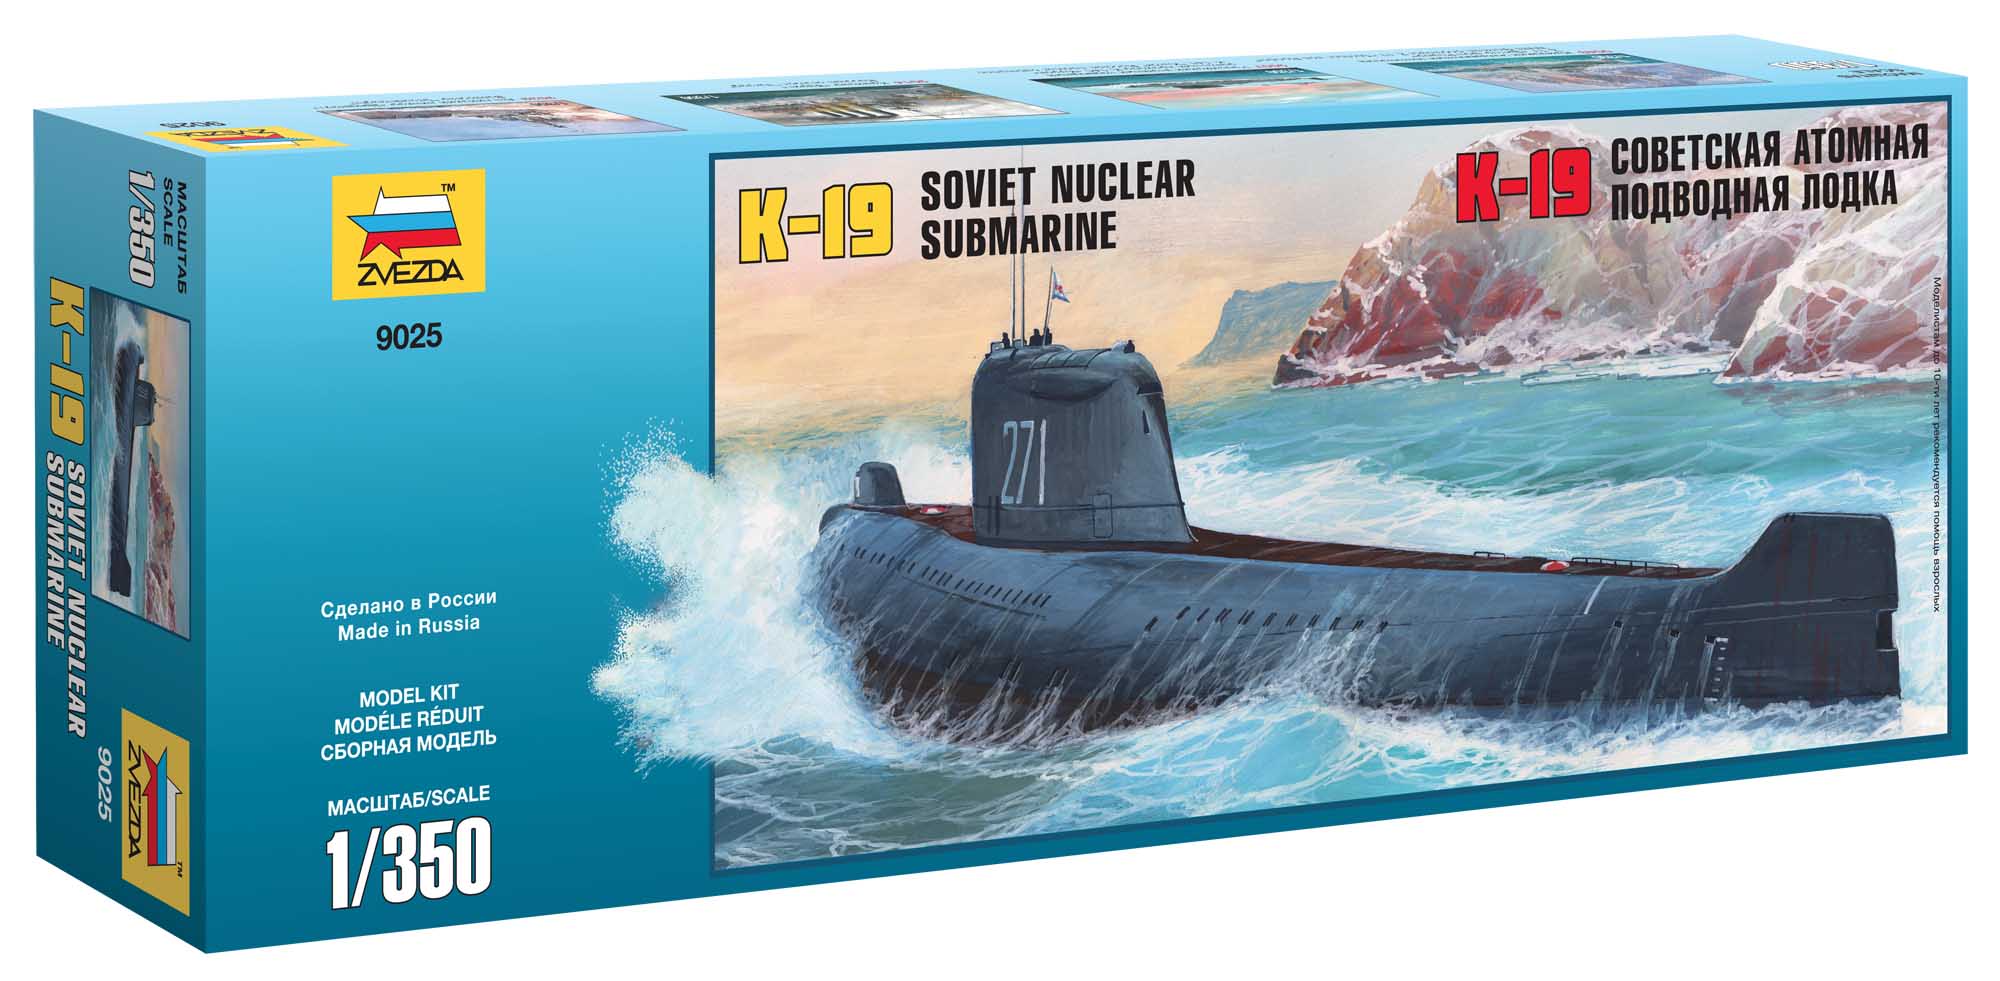 Model Kit ponorka 9025 - K-19 Soviet Nuclear Submarine "Hotel" Class (1:350)